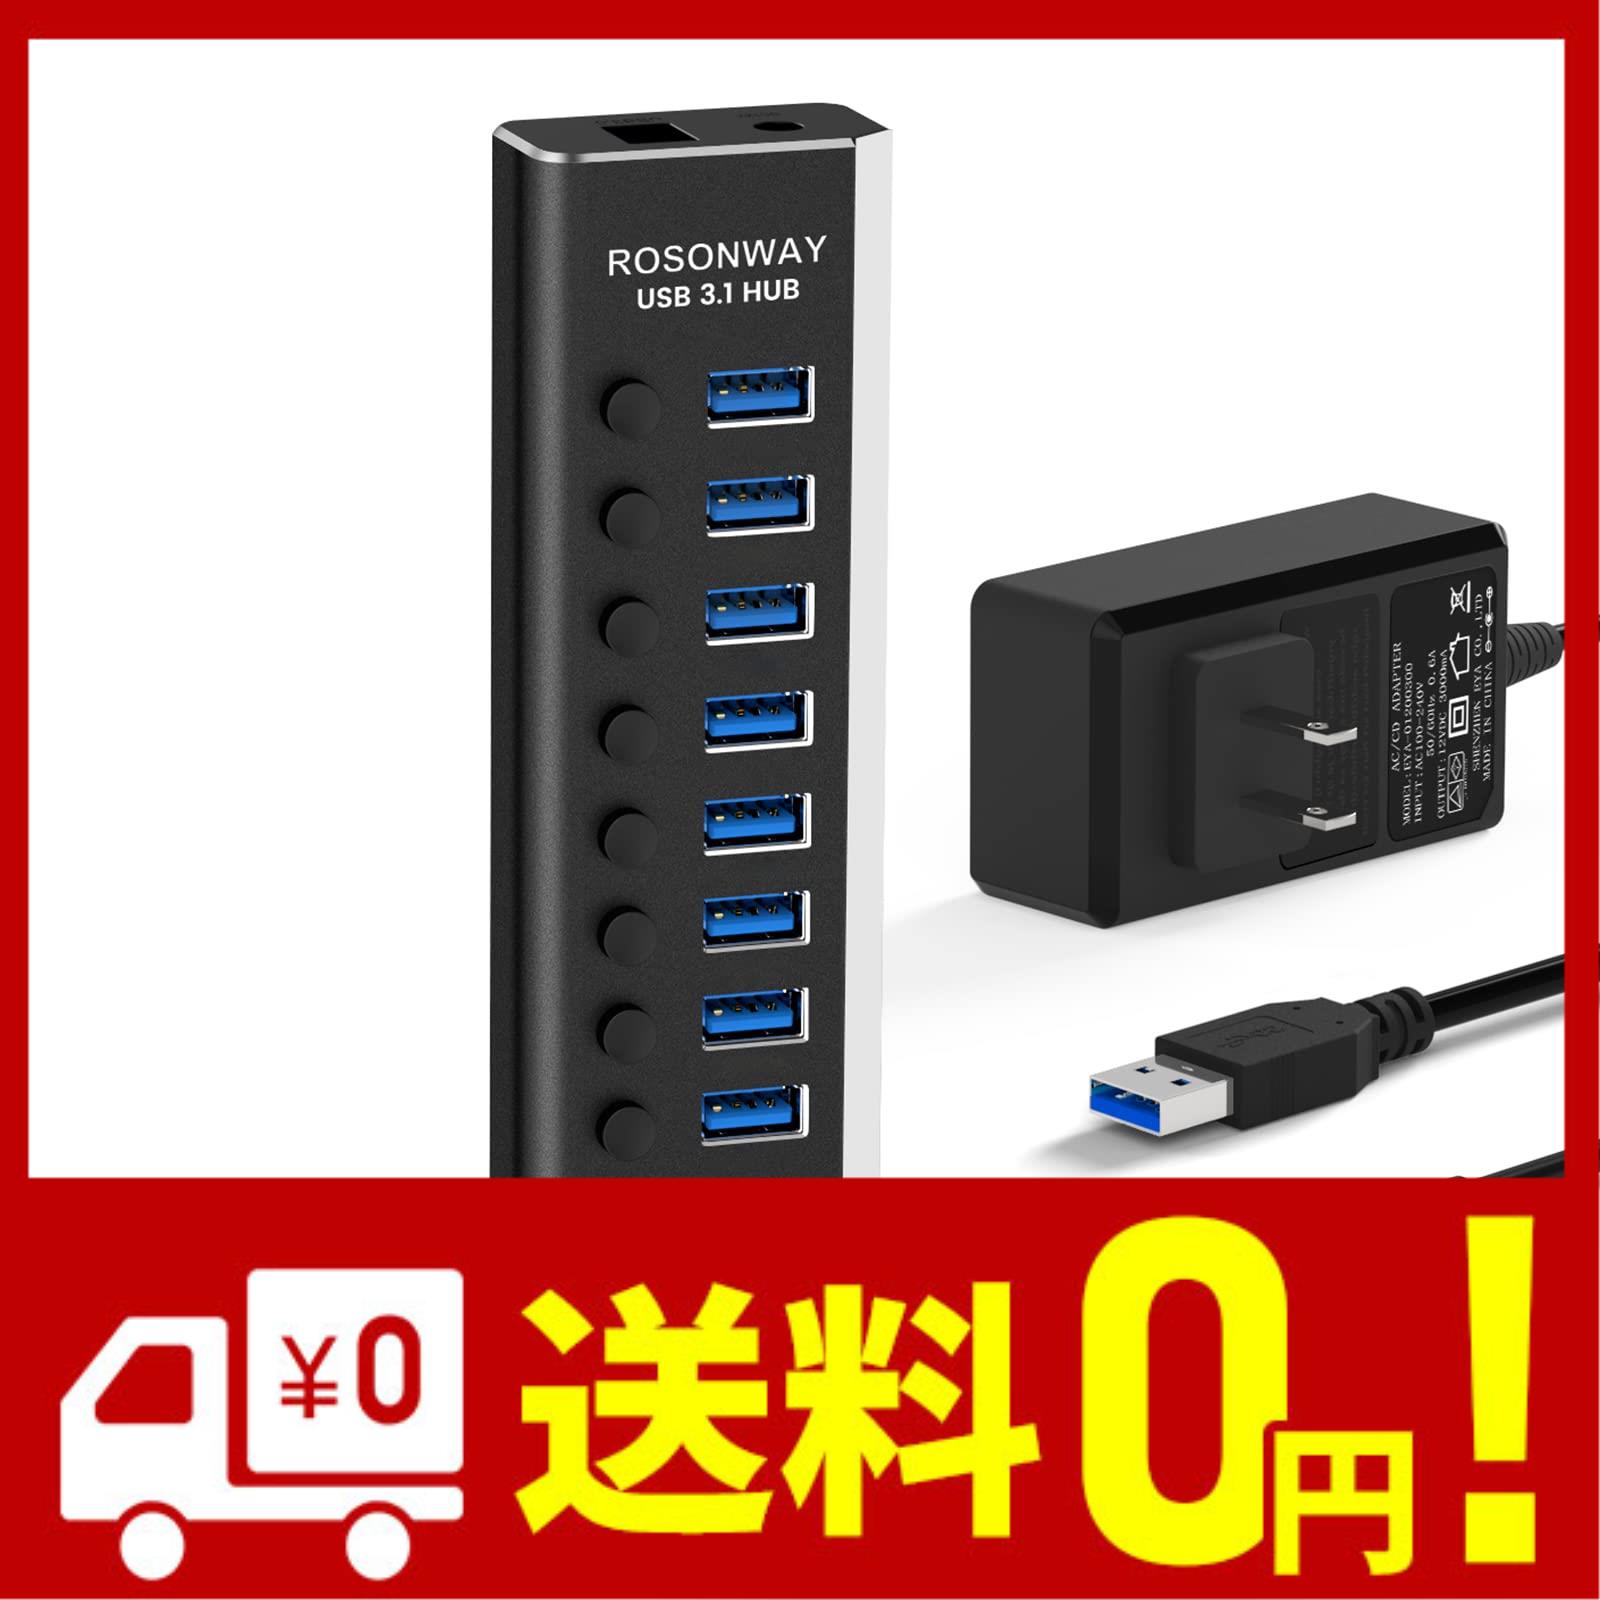 ROSONWAY USB ハブ 3.1 Gen2 10Gbps 10ポートアルミ製 36W USB HUB セルフパワー USBケーブルとType Cケーブル 付き 12V 3A ACアダプタ